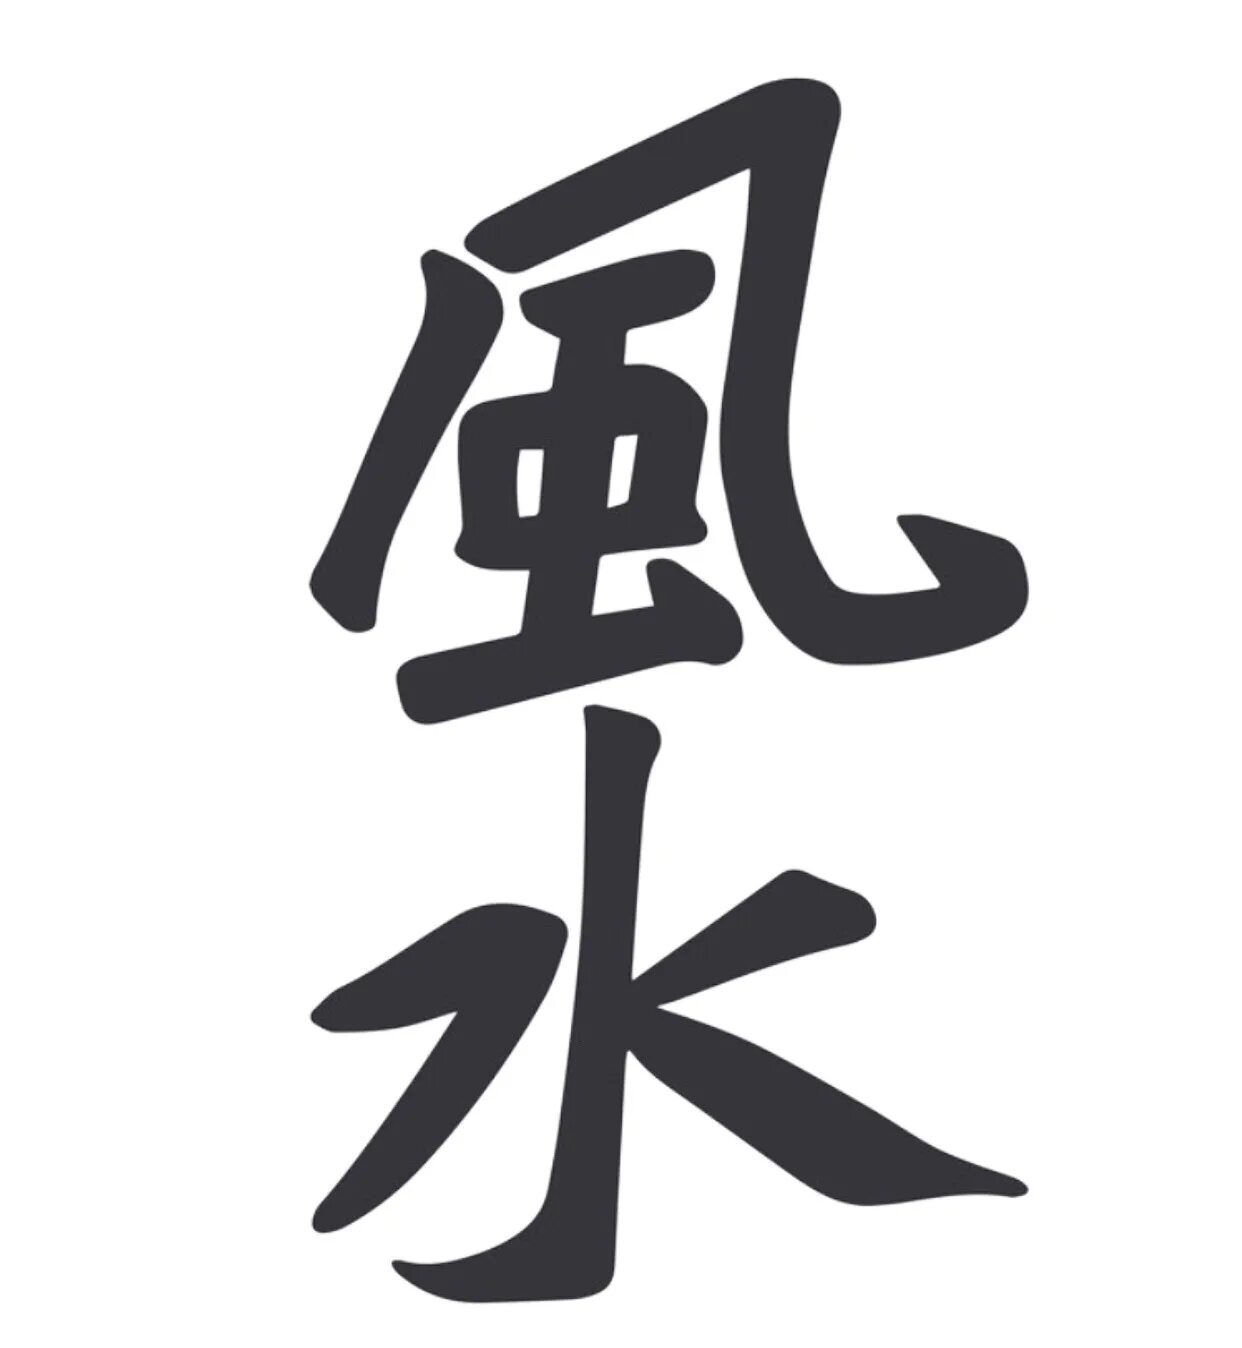 Как будет по китайски саша. Иероглифы фен шуй. Японский иероглиф удача. Китайские символы. Китайские символы фен шуй.